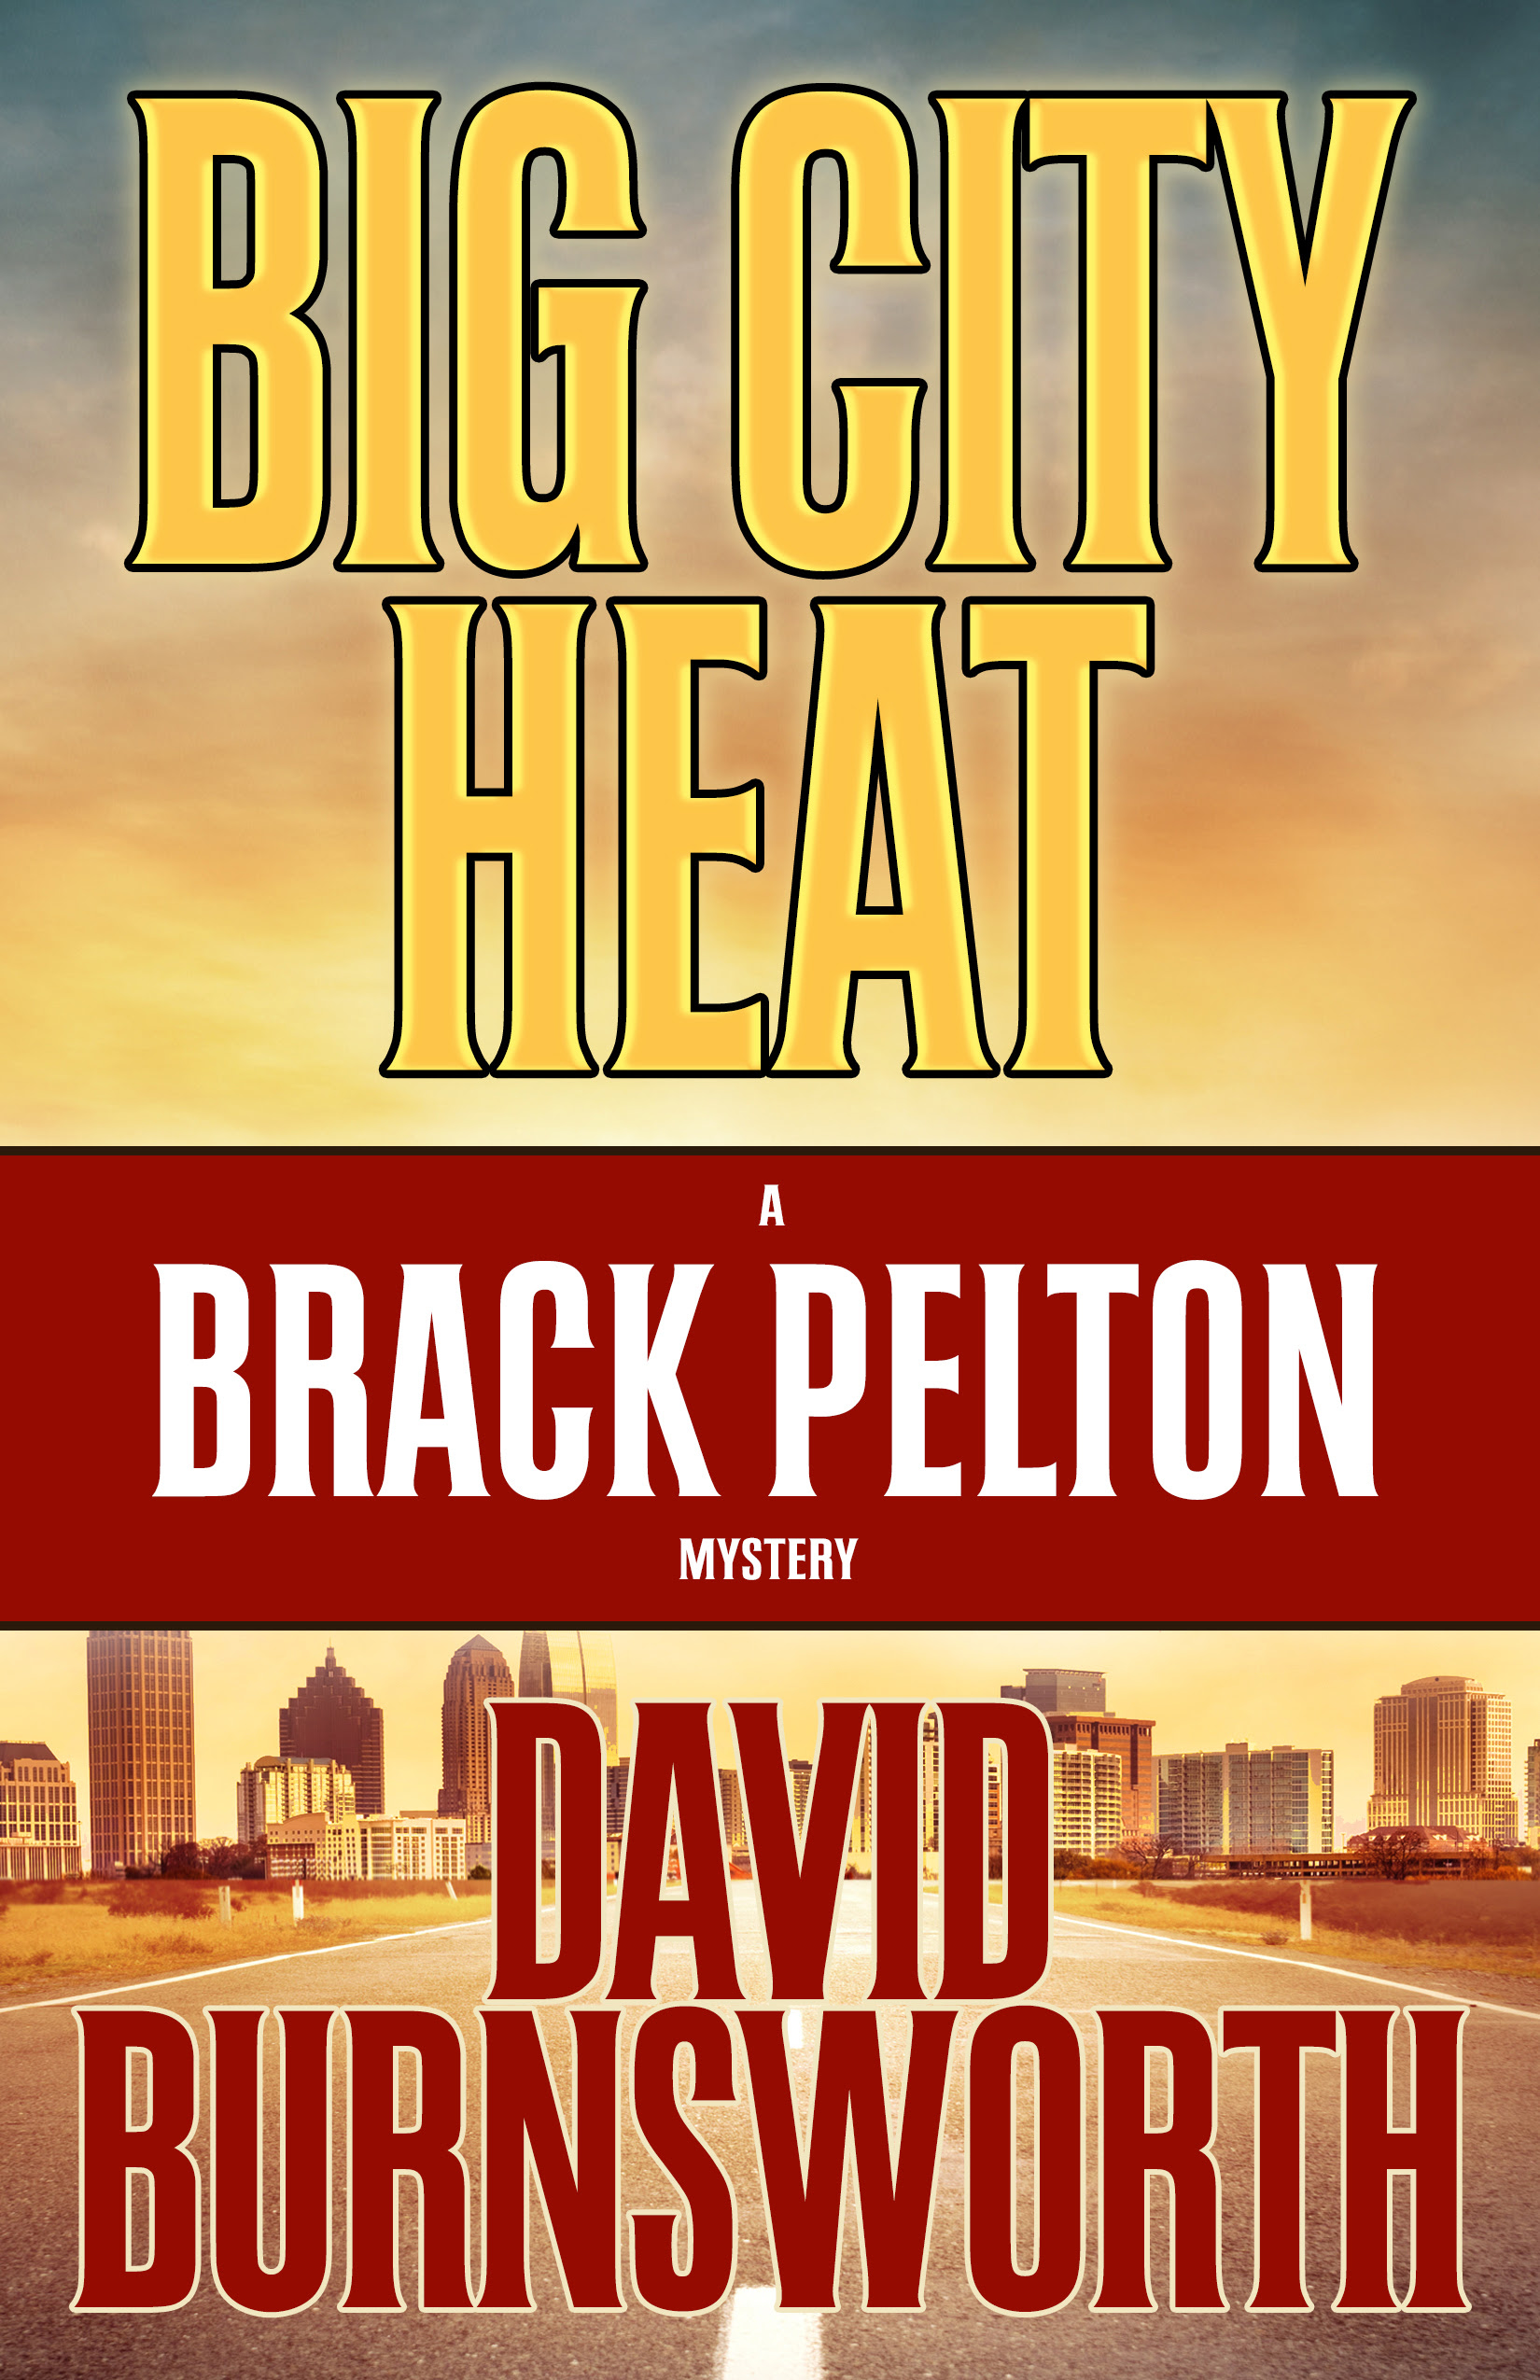 Big City Heat: A Brack Pelton Mystery by David Burnsworth